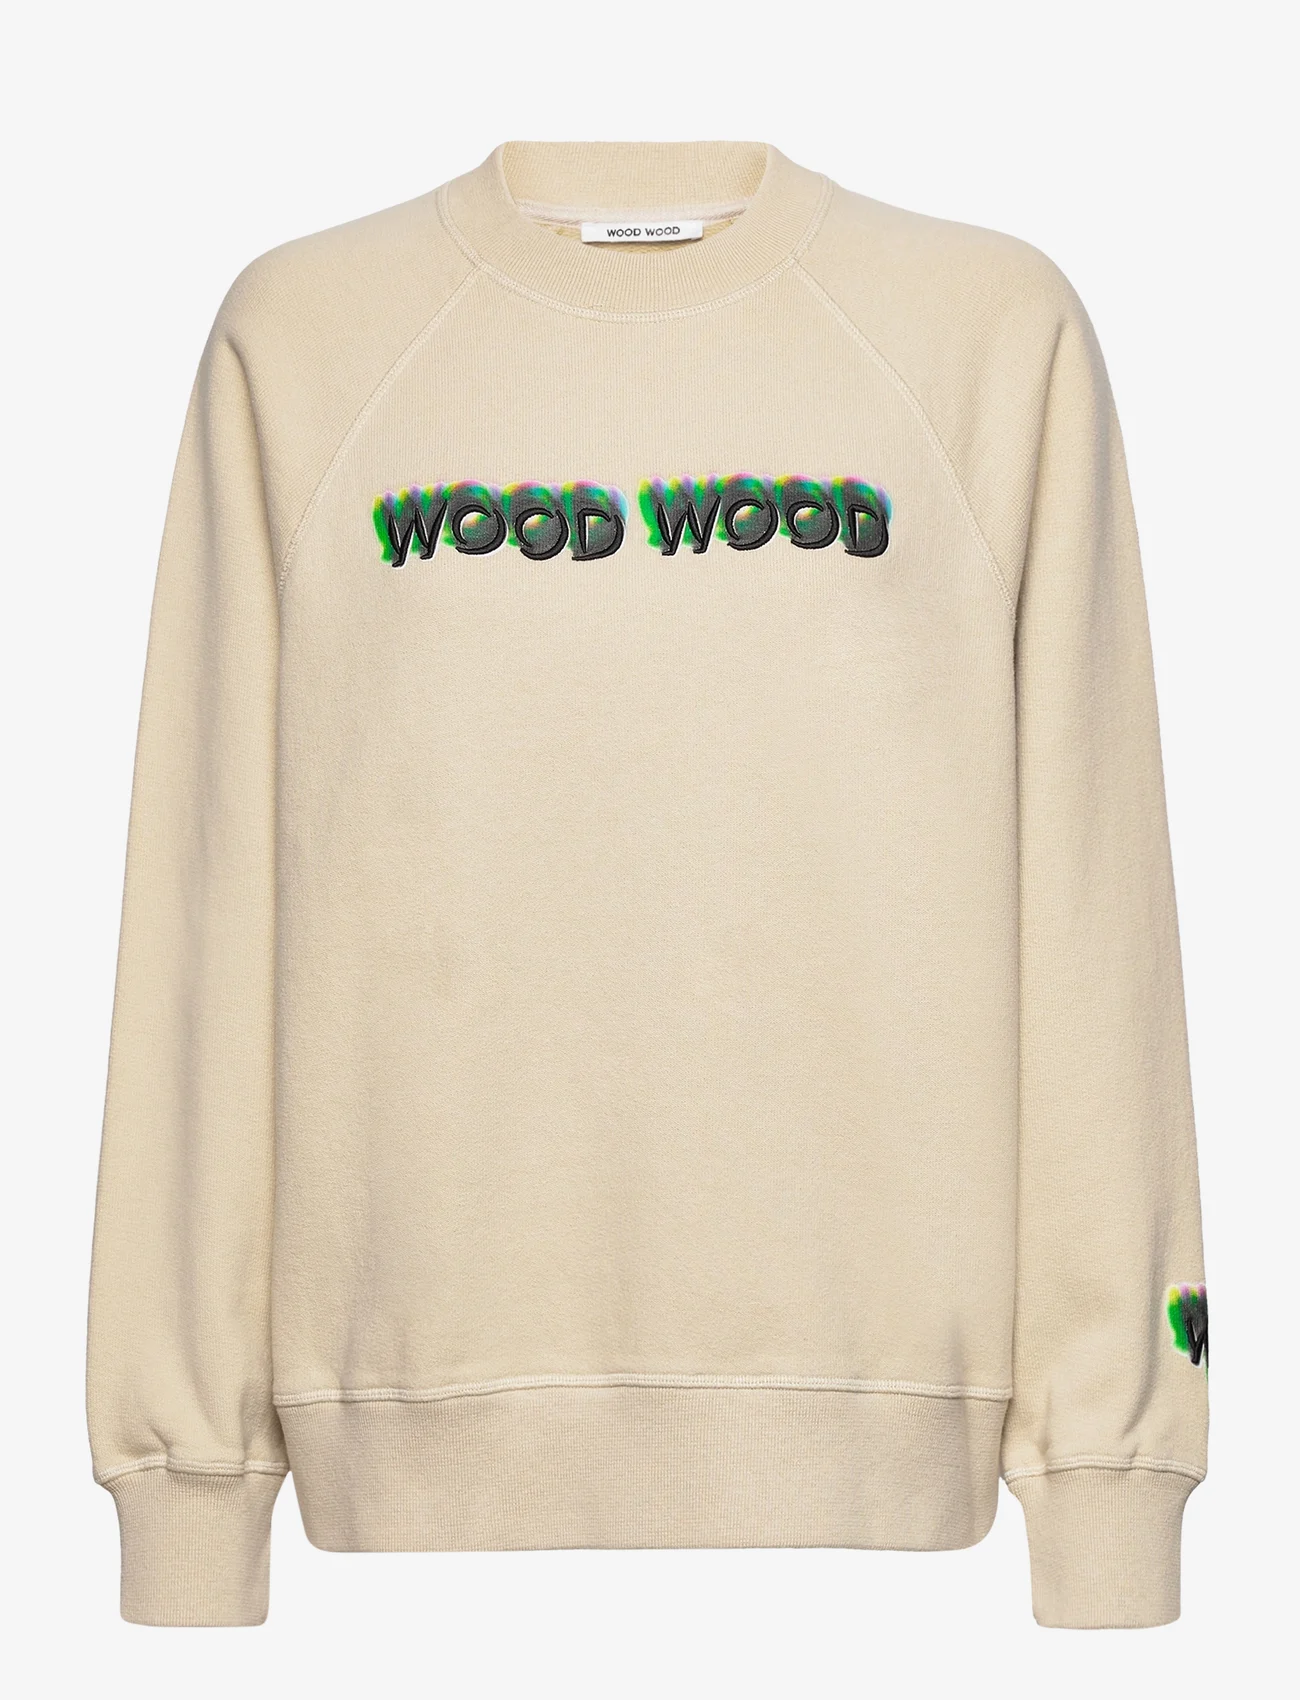 Wood Wood - Leia logo sweatshirt - hoodies - soft sand - 0